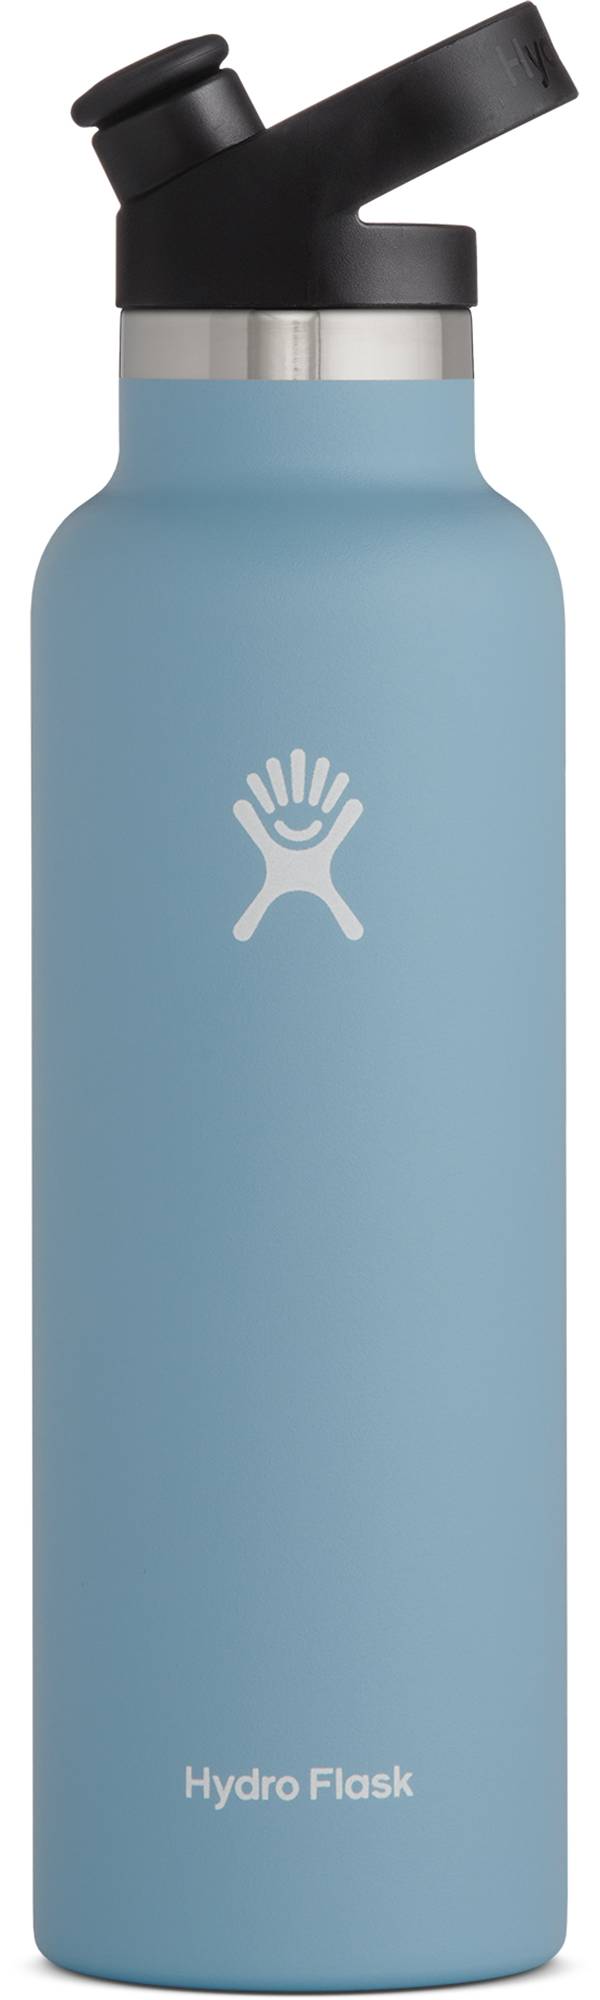 Hydro Flask 21 oz. Vacuum Insulated Bottle product image